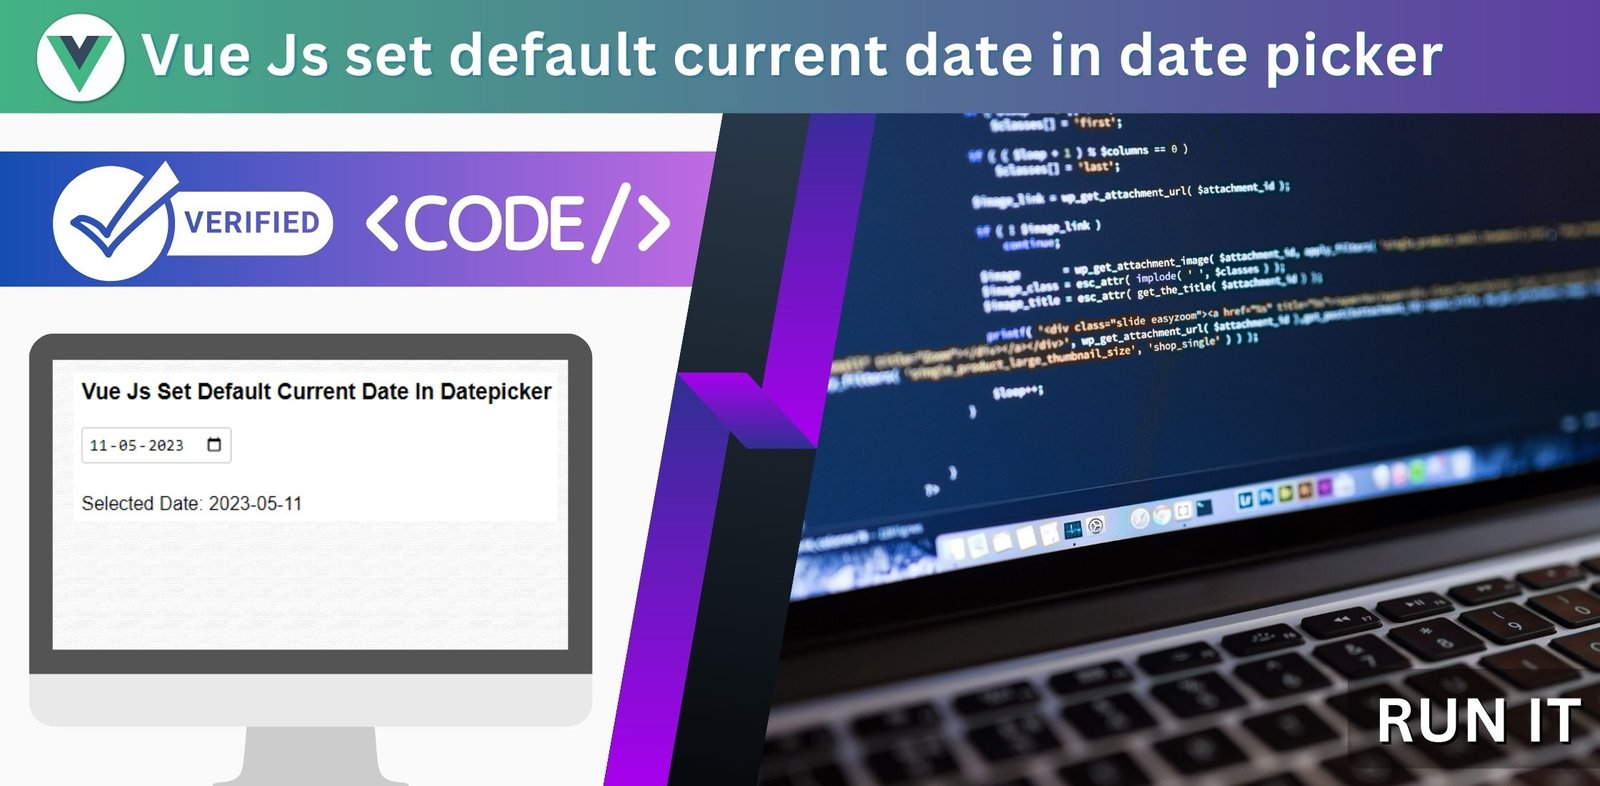 Vue Js set default current date in datepicker